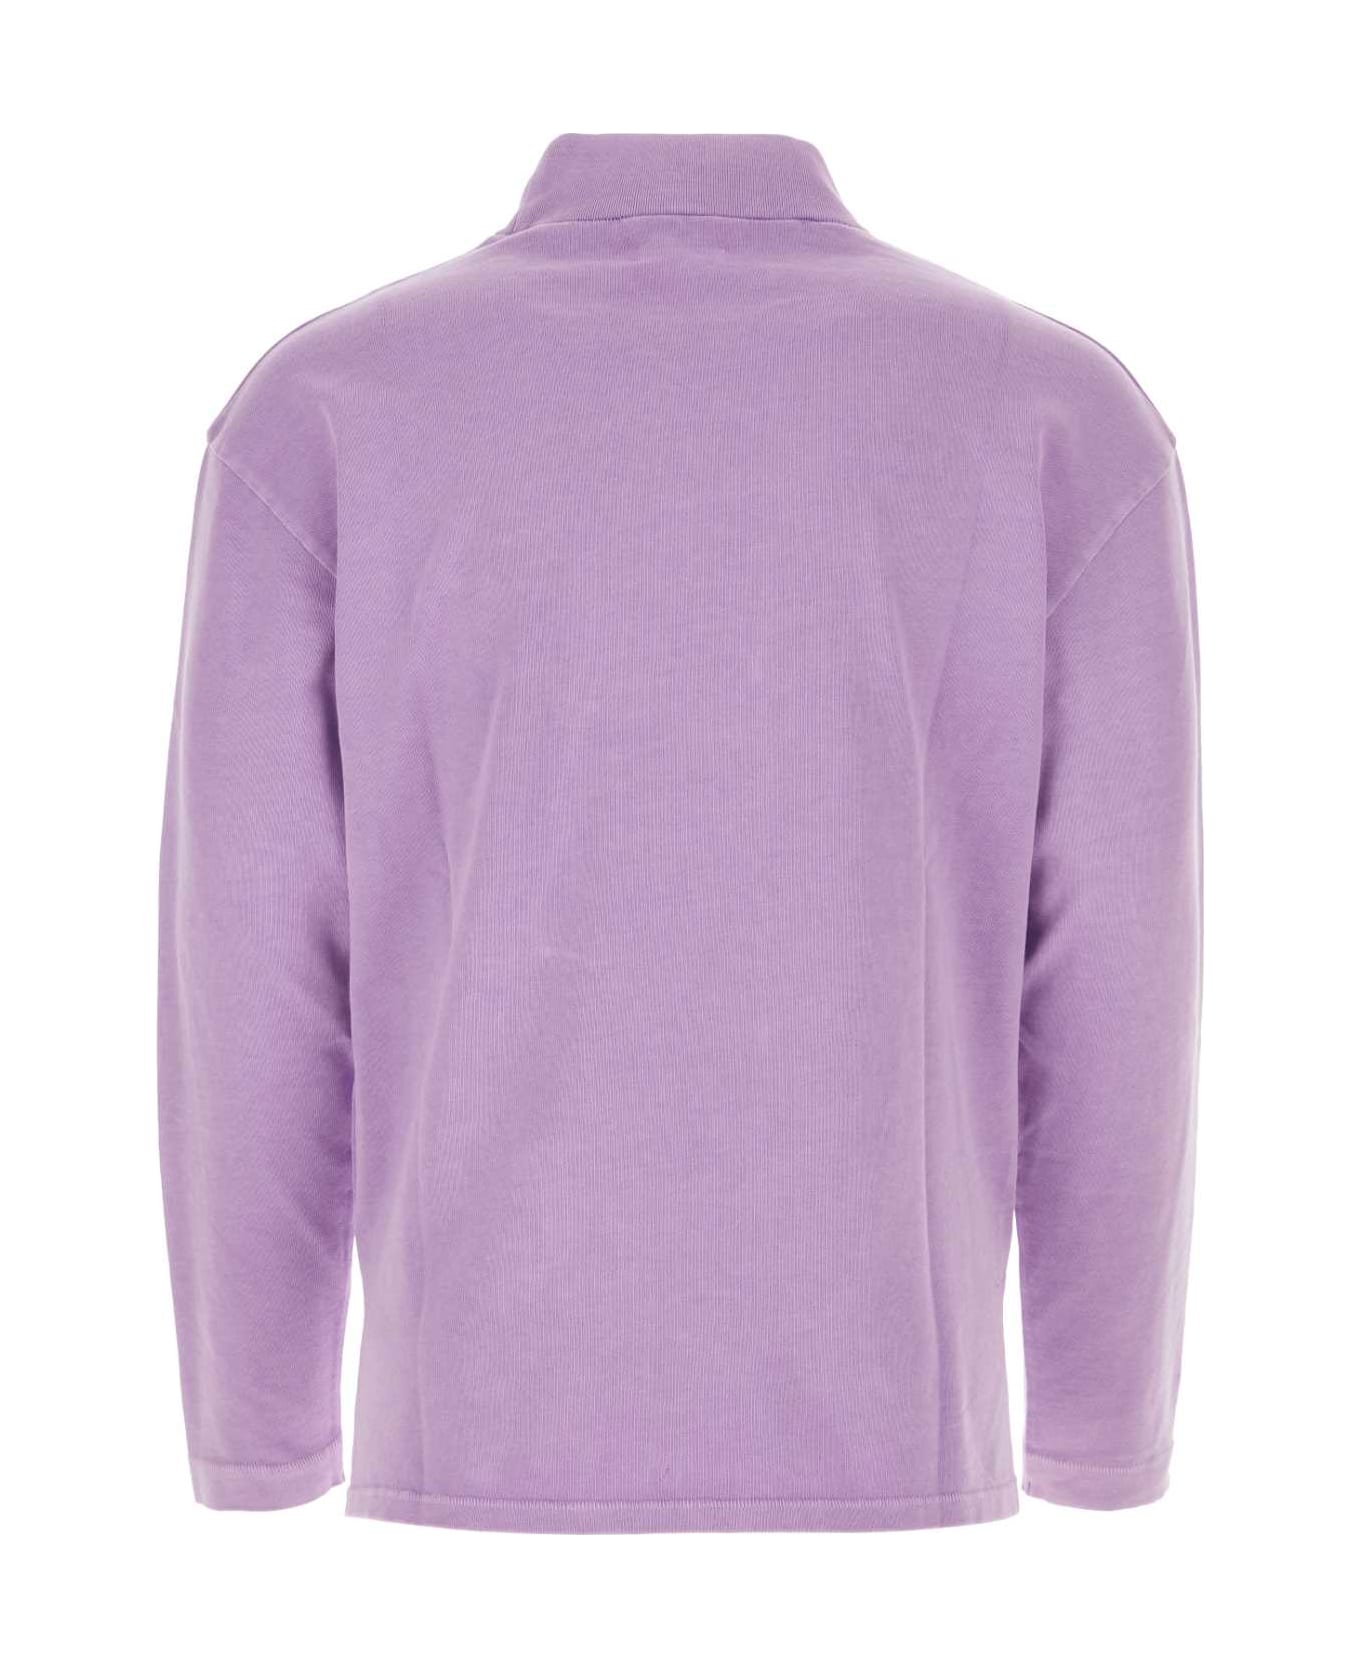 ERL Lilac Cotton Sweatshirt - PURPLE